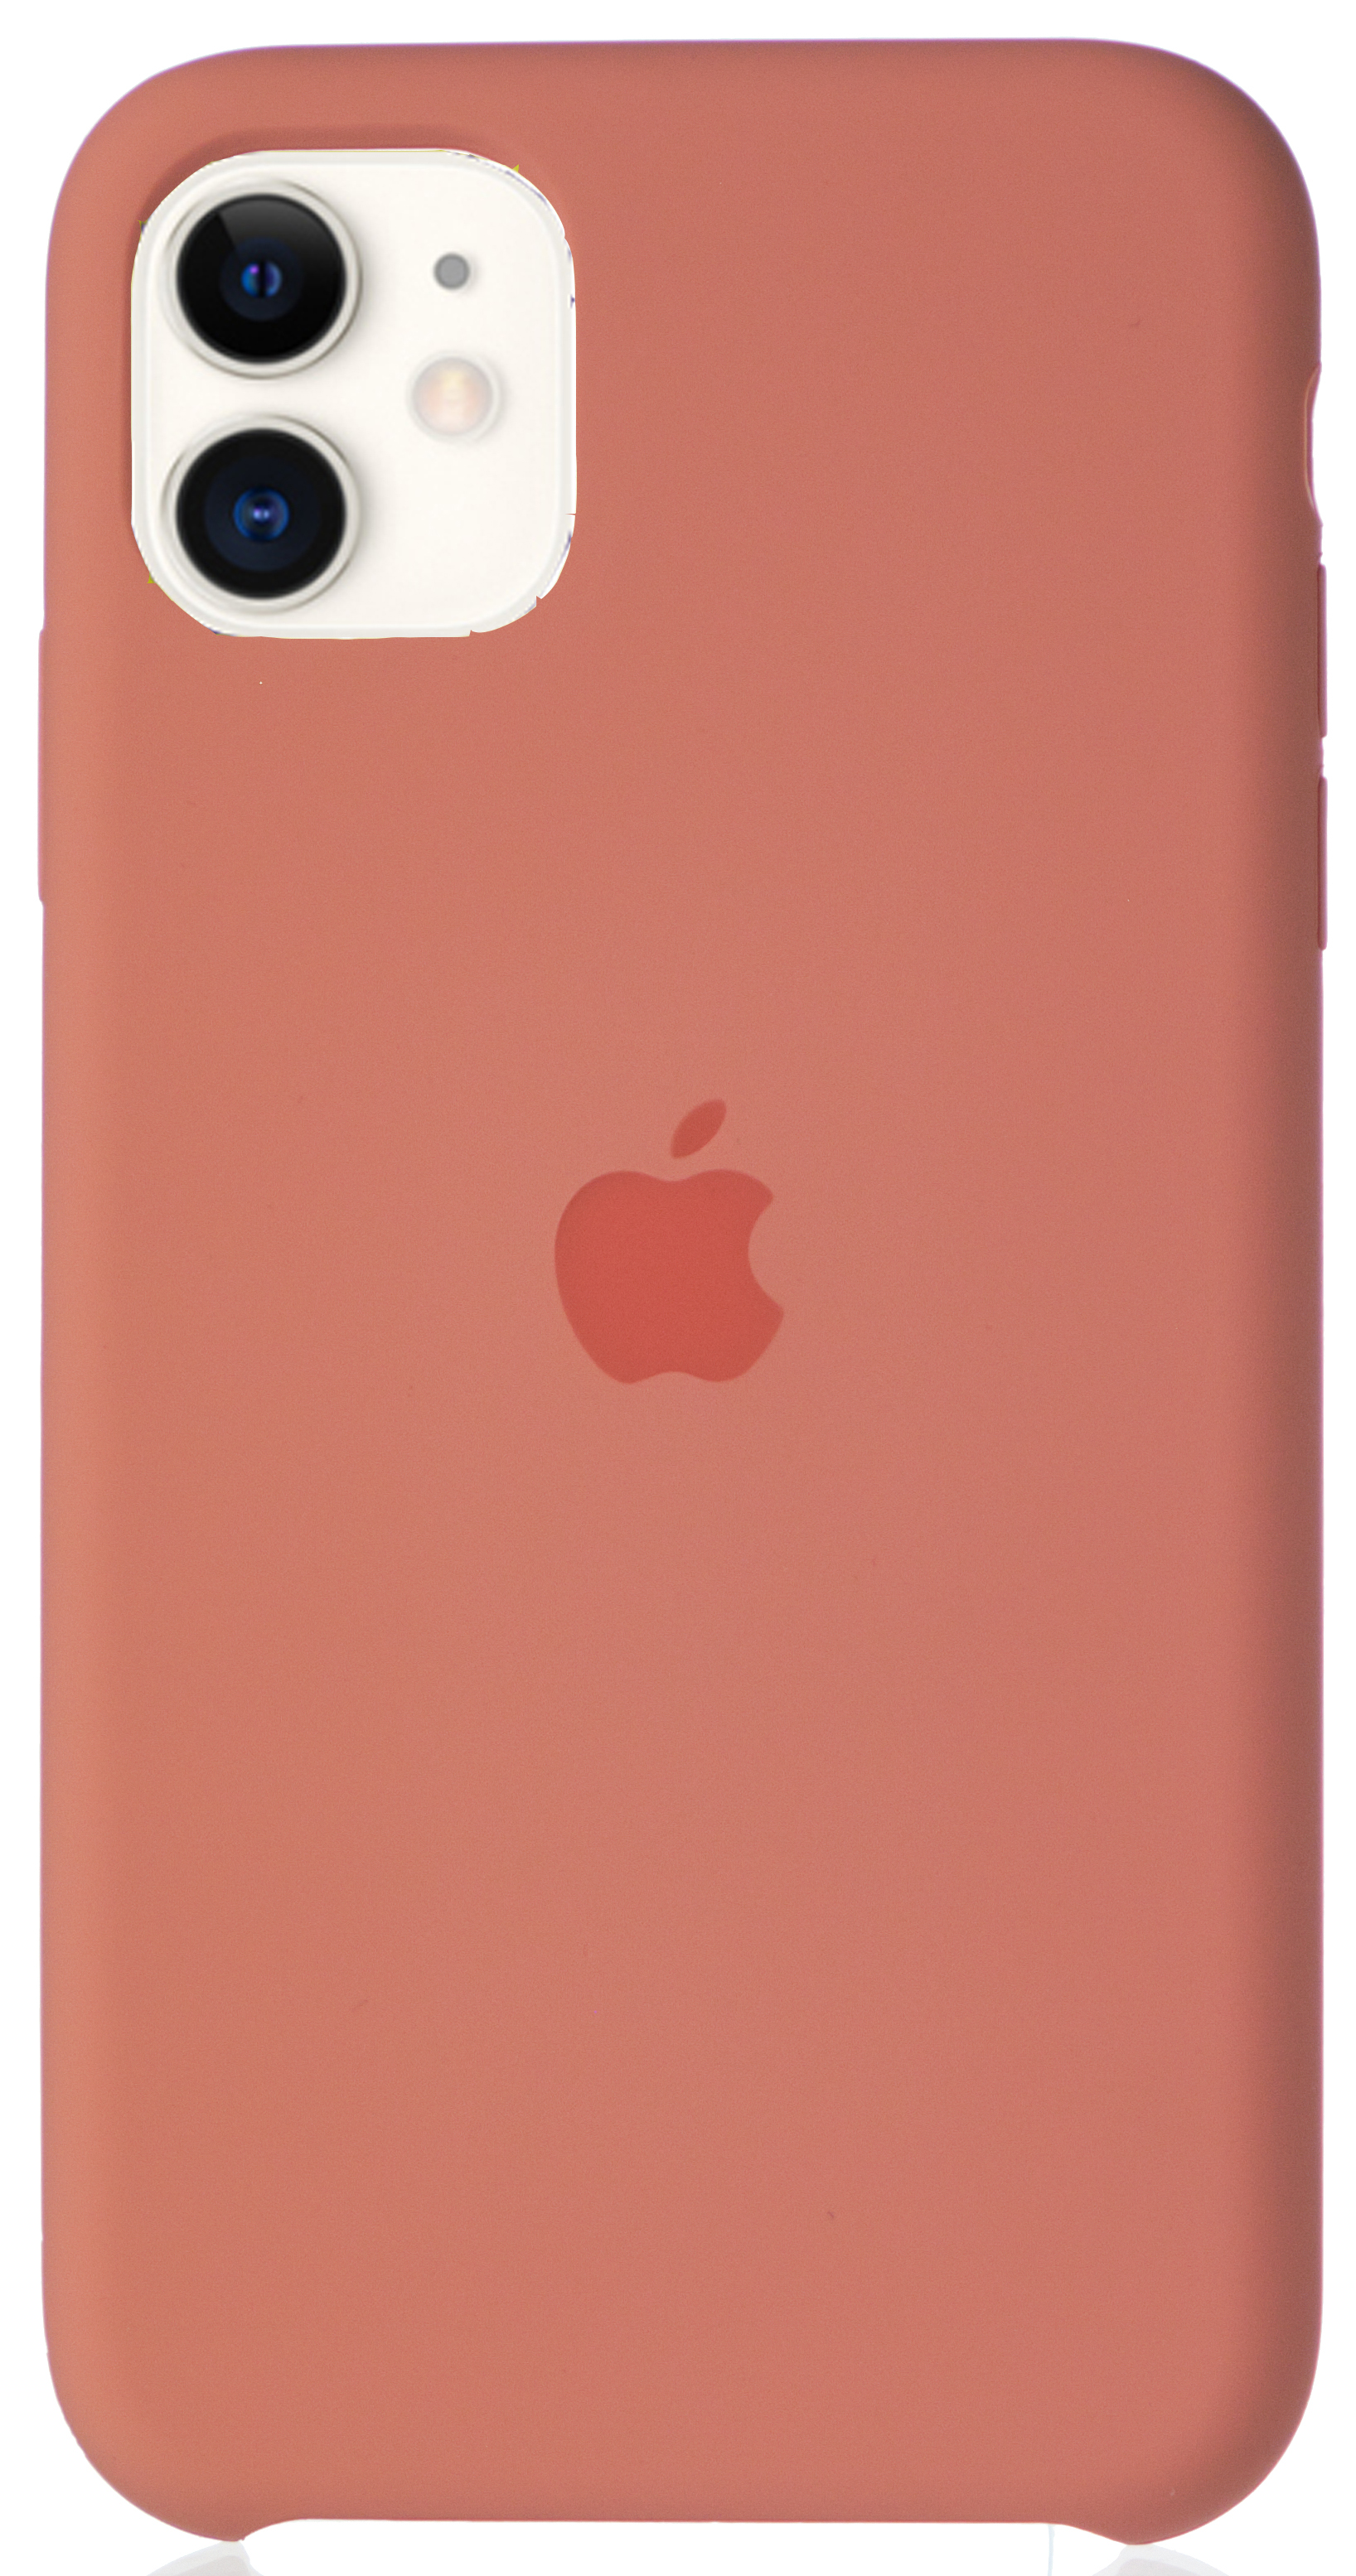 Чехол Silicone Case для iPhone 11 персиковый